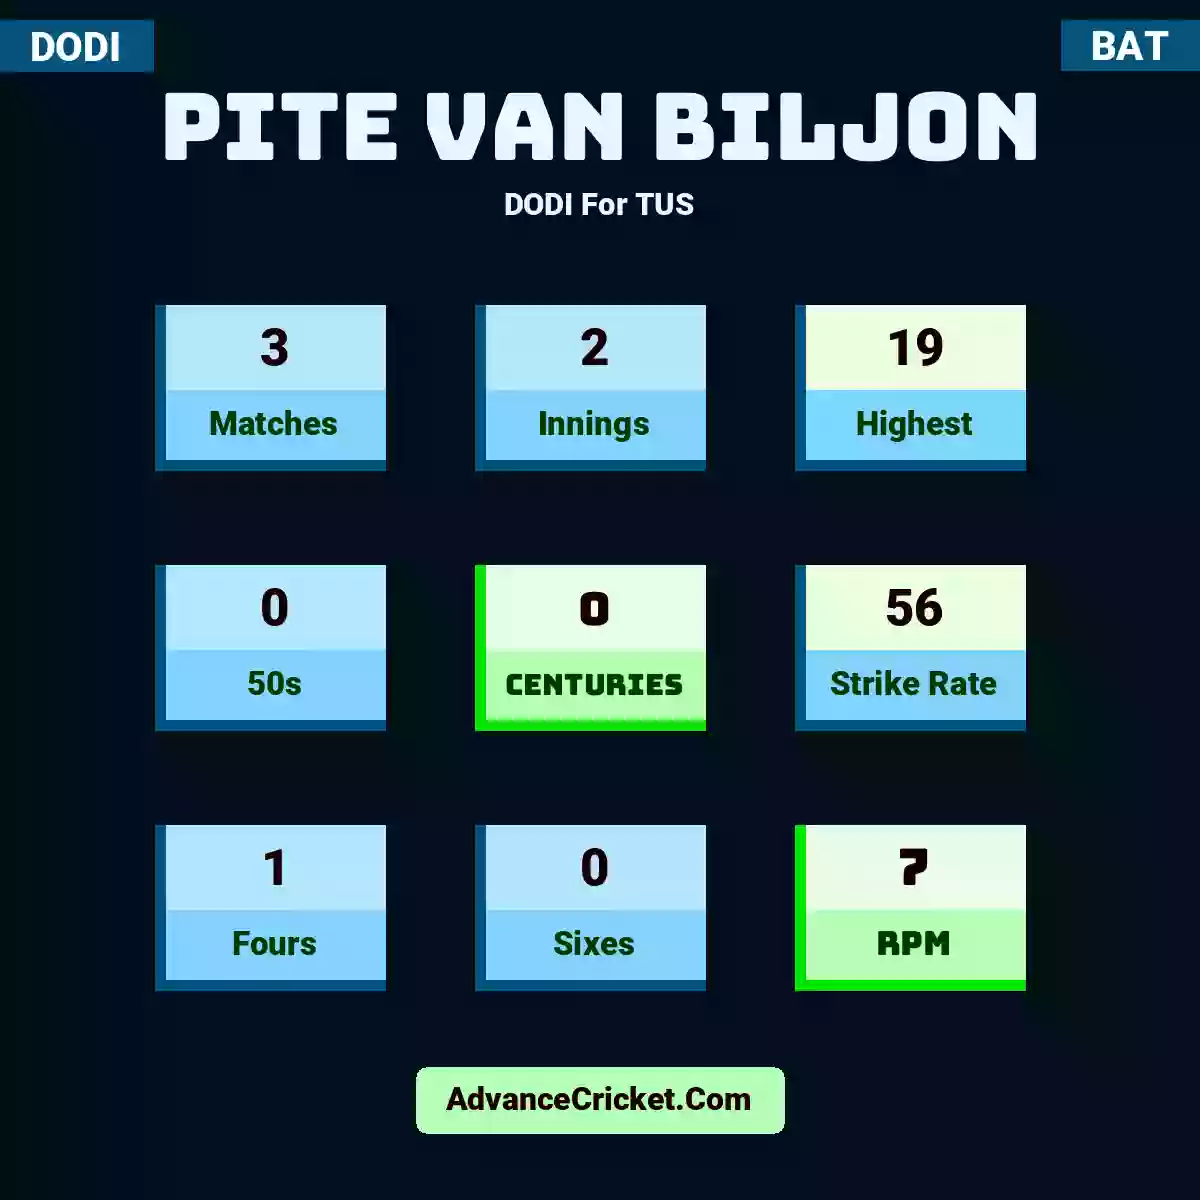 Pite van Biljon DODI  For TUS, Pite van Biljon played 3 matches, scored 19 runs as highest, 0 half-centuries, and 0 centuries, with a strike rate of 56. P.VBiljon hit 1 fours and 0 sixes, with an RPM of 7.